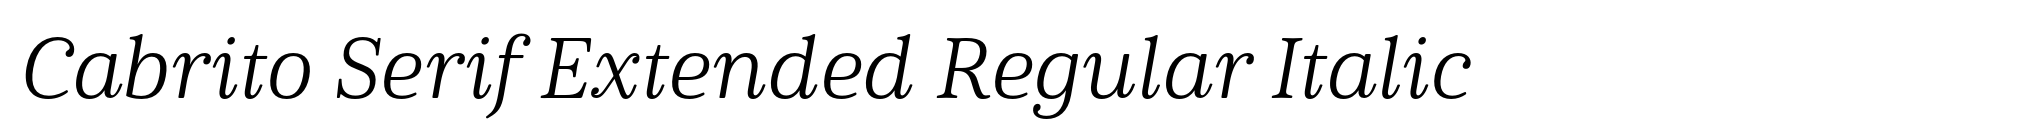 Cabrito Serif Extended Regular Italic image